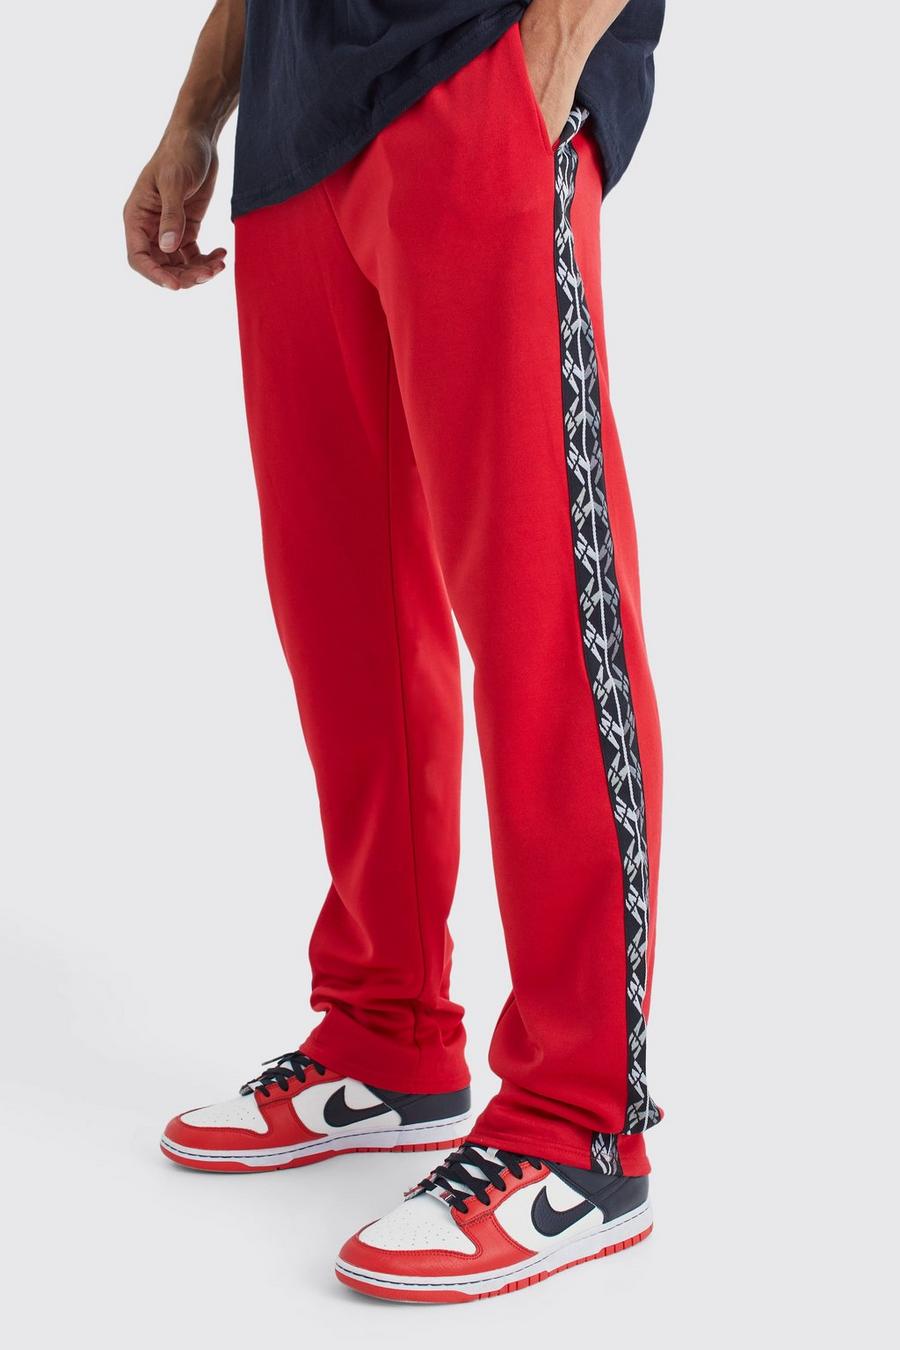 Pantalón deportivo Regular de tejido por urdimbre con franja lateral, Red